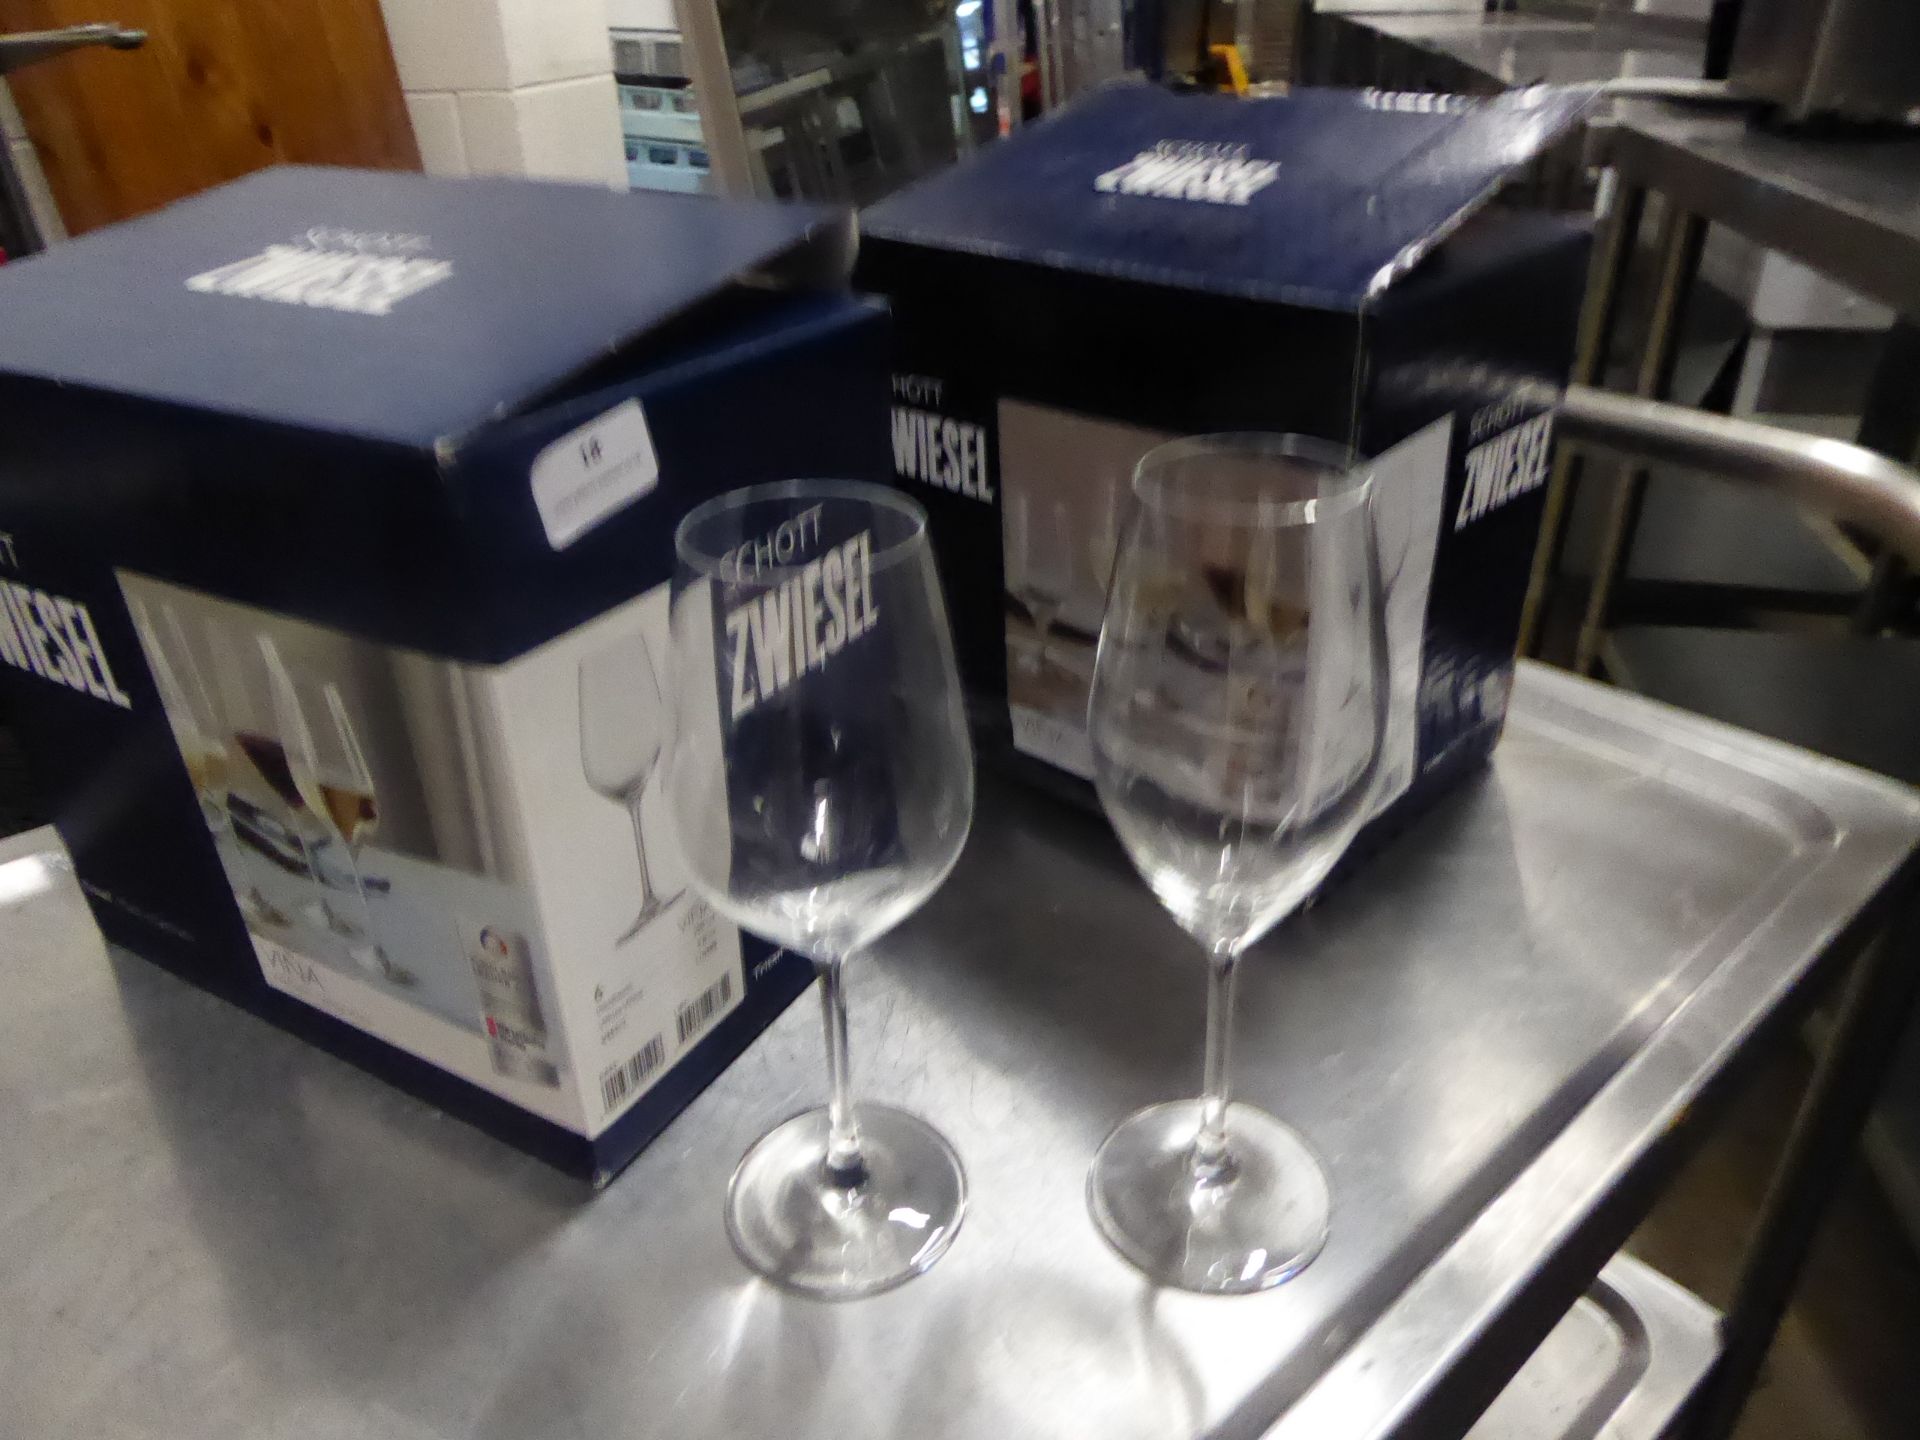 * 2 x 6 wine glasses boxed. 1 box x 270ml, 1 box x 290ml - Image 2 of 4